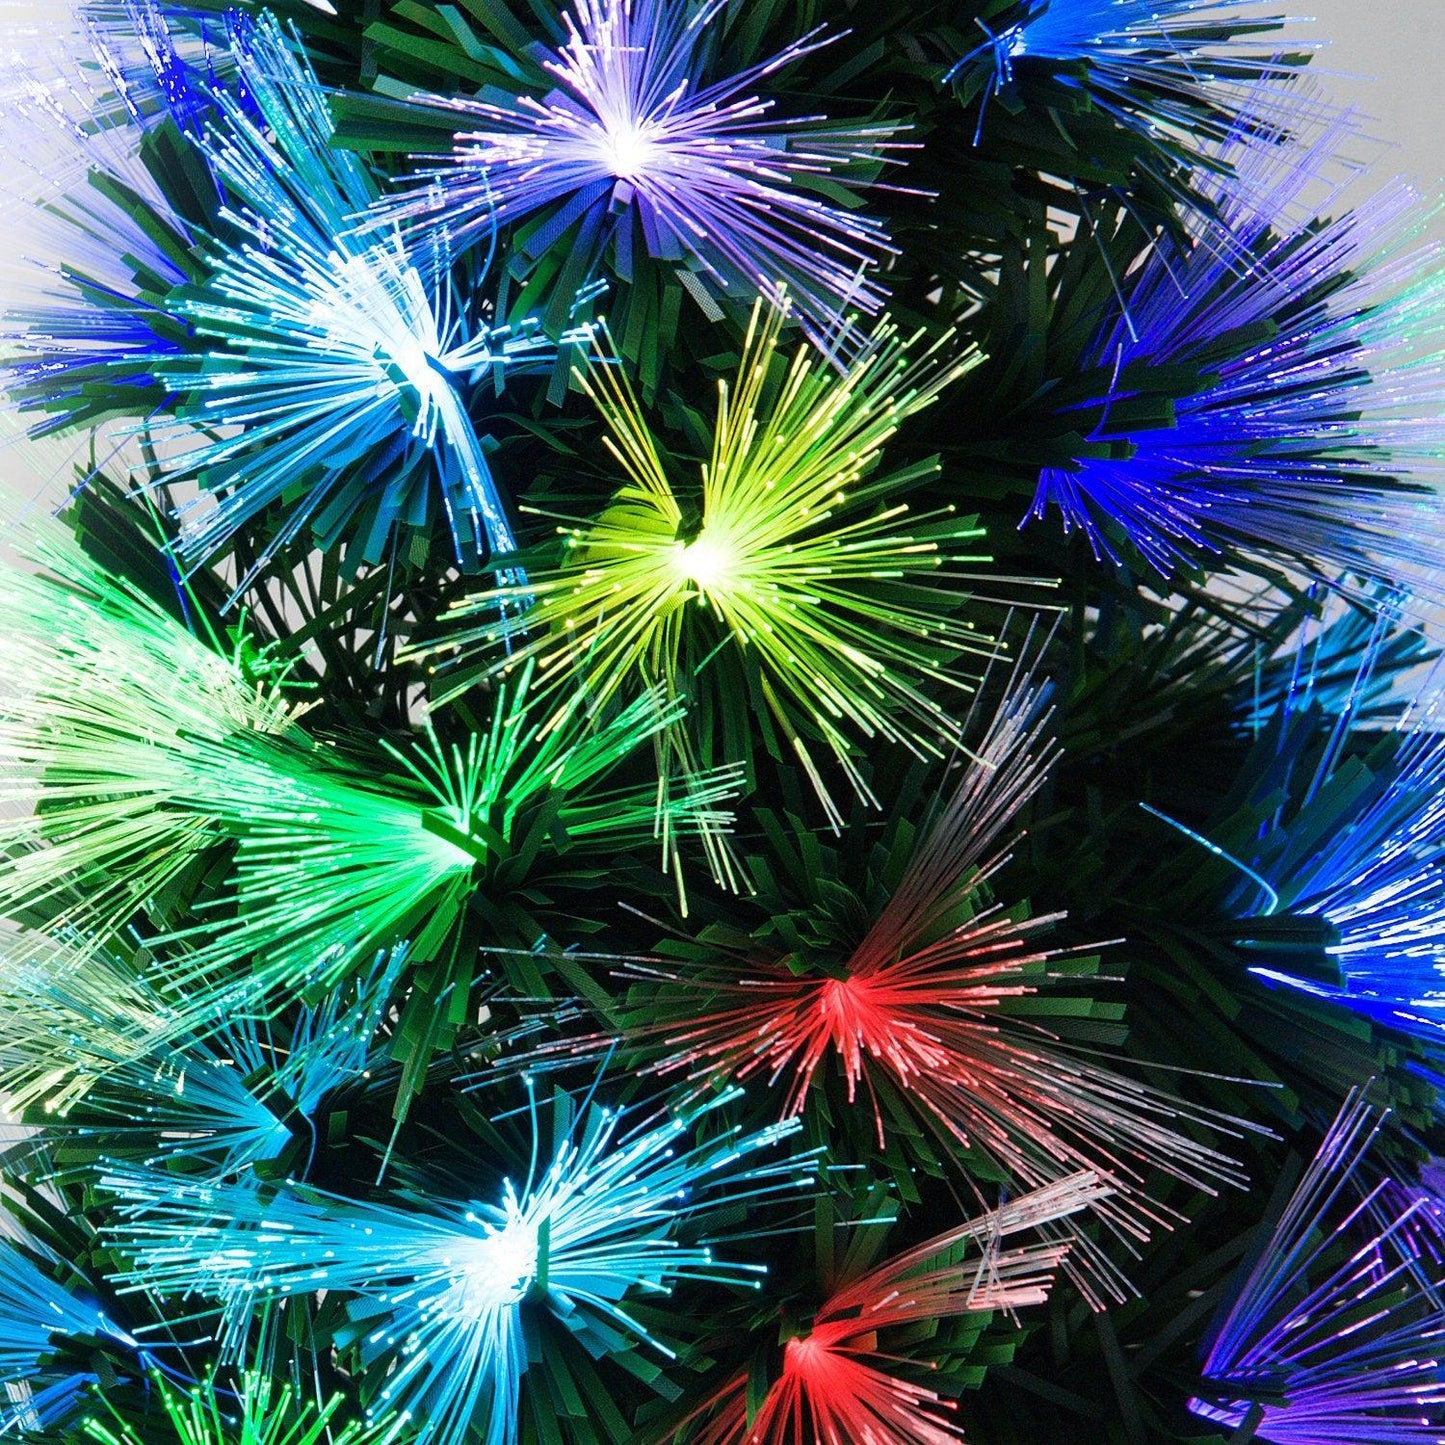 HOMCOM Fiber Optic LED Christmas Tree - Pre-Lit - ALL4U RETAILER LTD